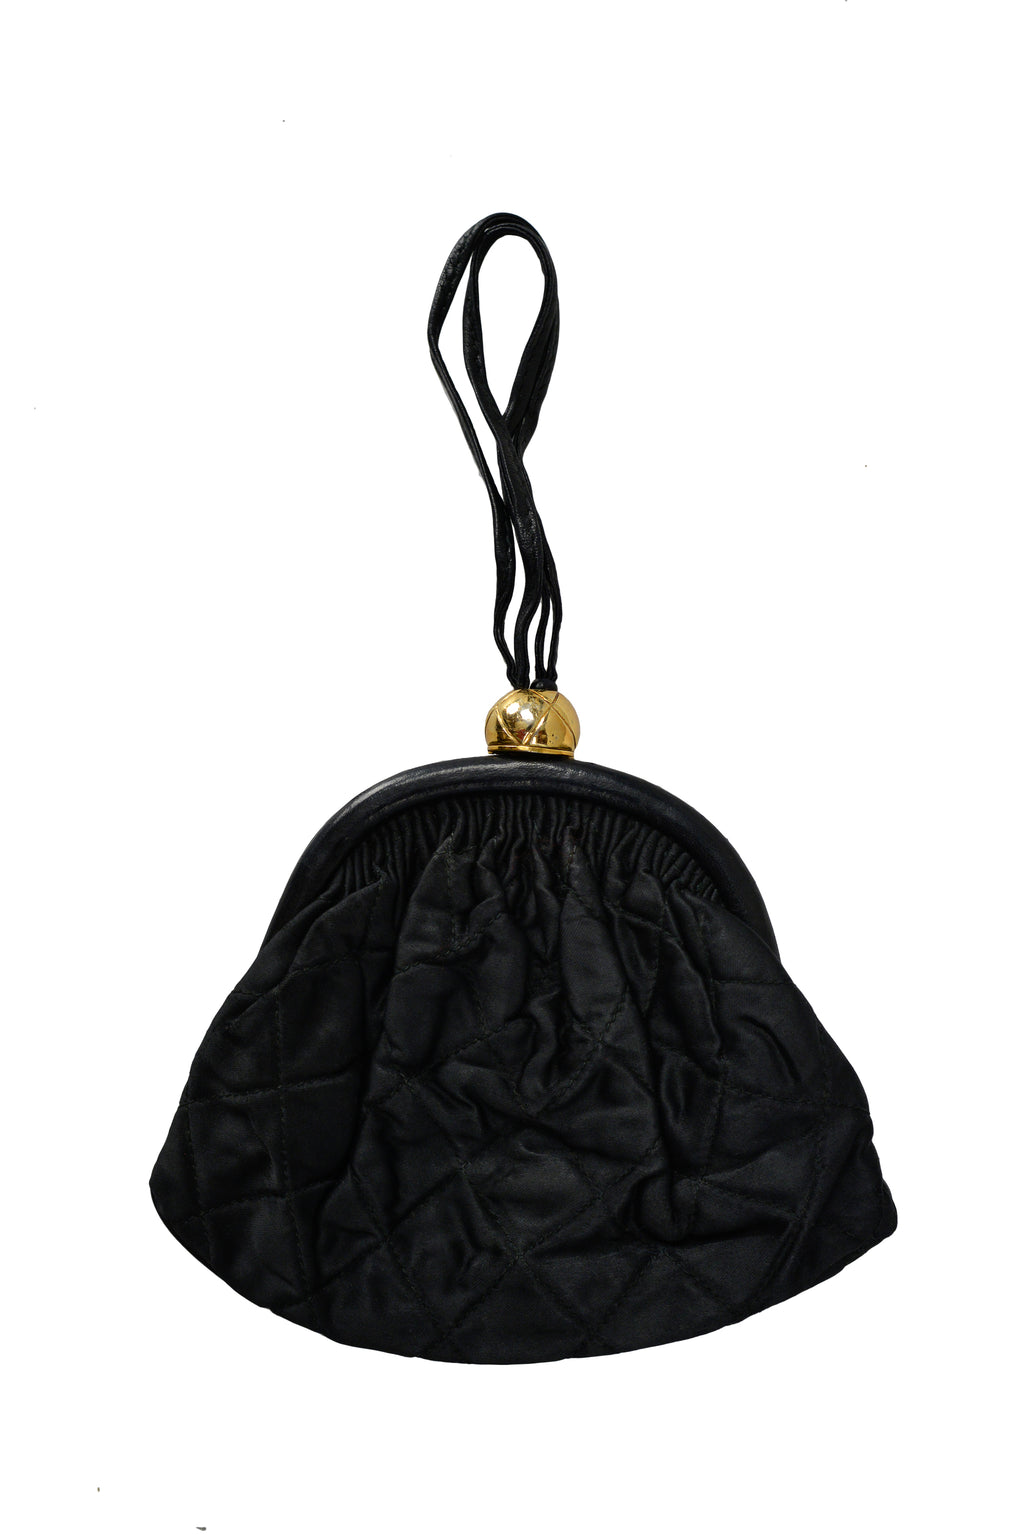 Chanel 2015 Black Leather Dual Quilted Mini Coco Boy Crossbody Bag SHW